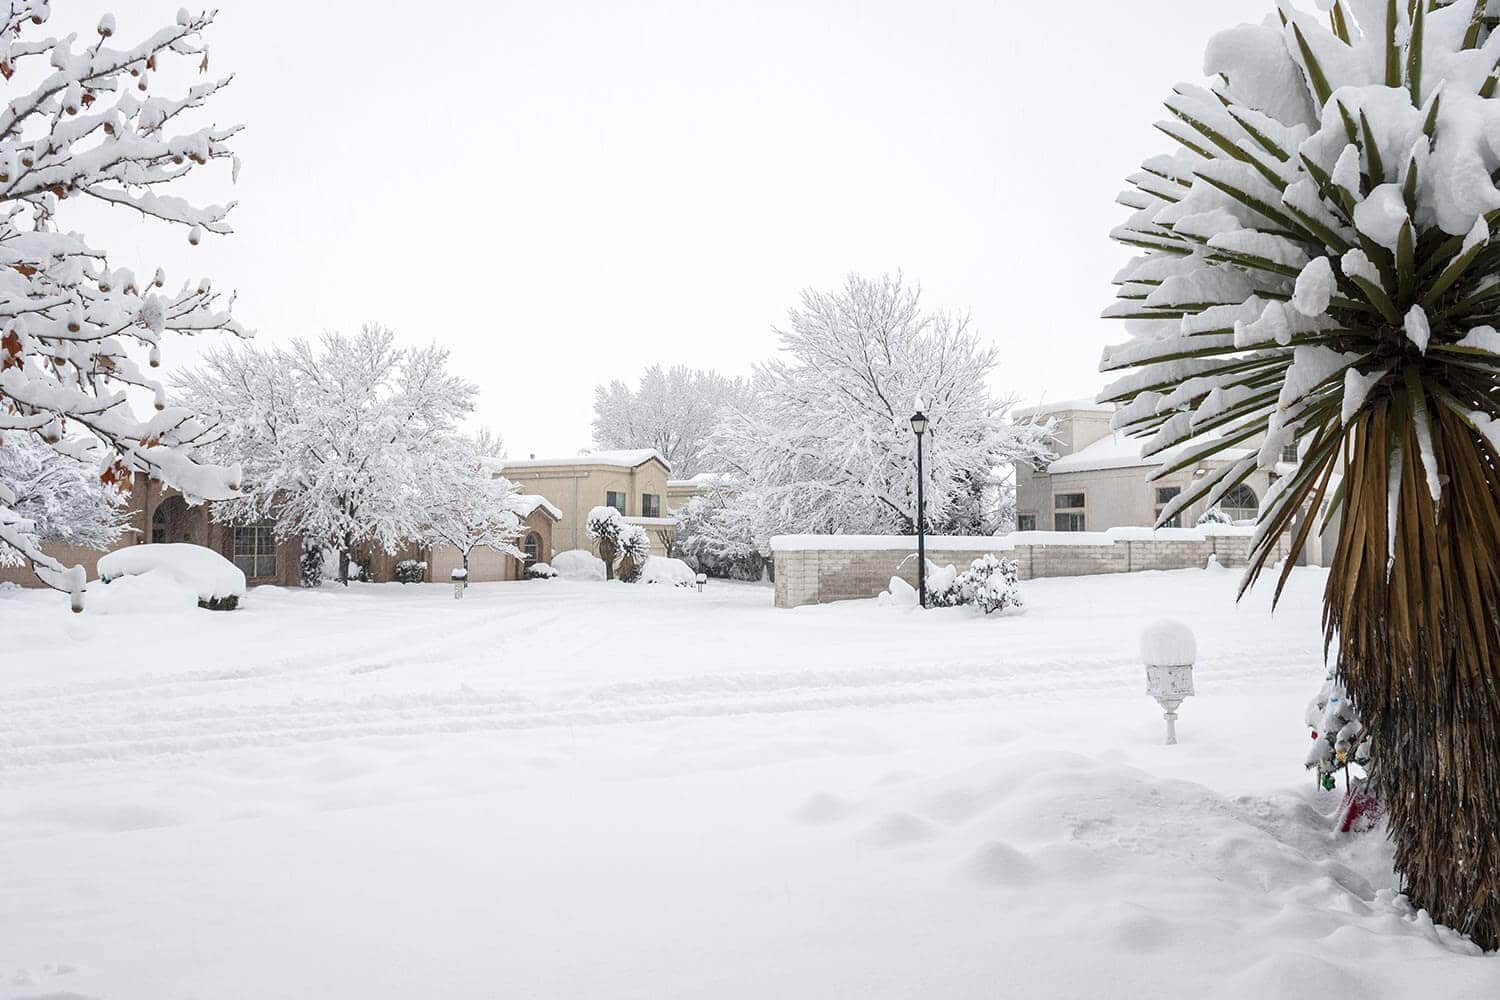 Albuquerque New Mexico Record Snow in winter